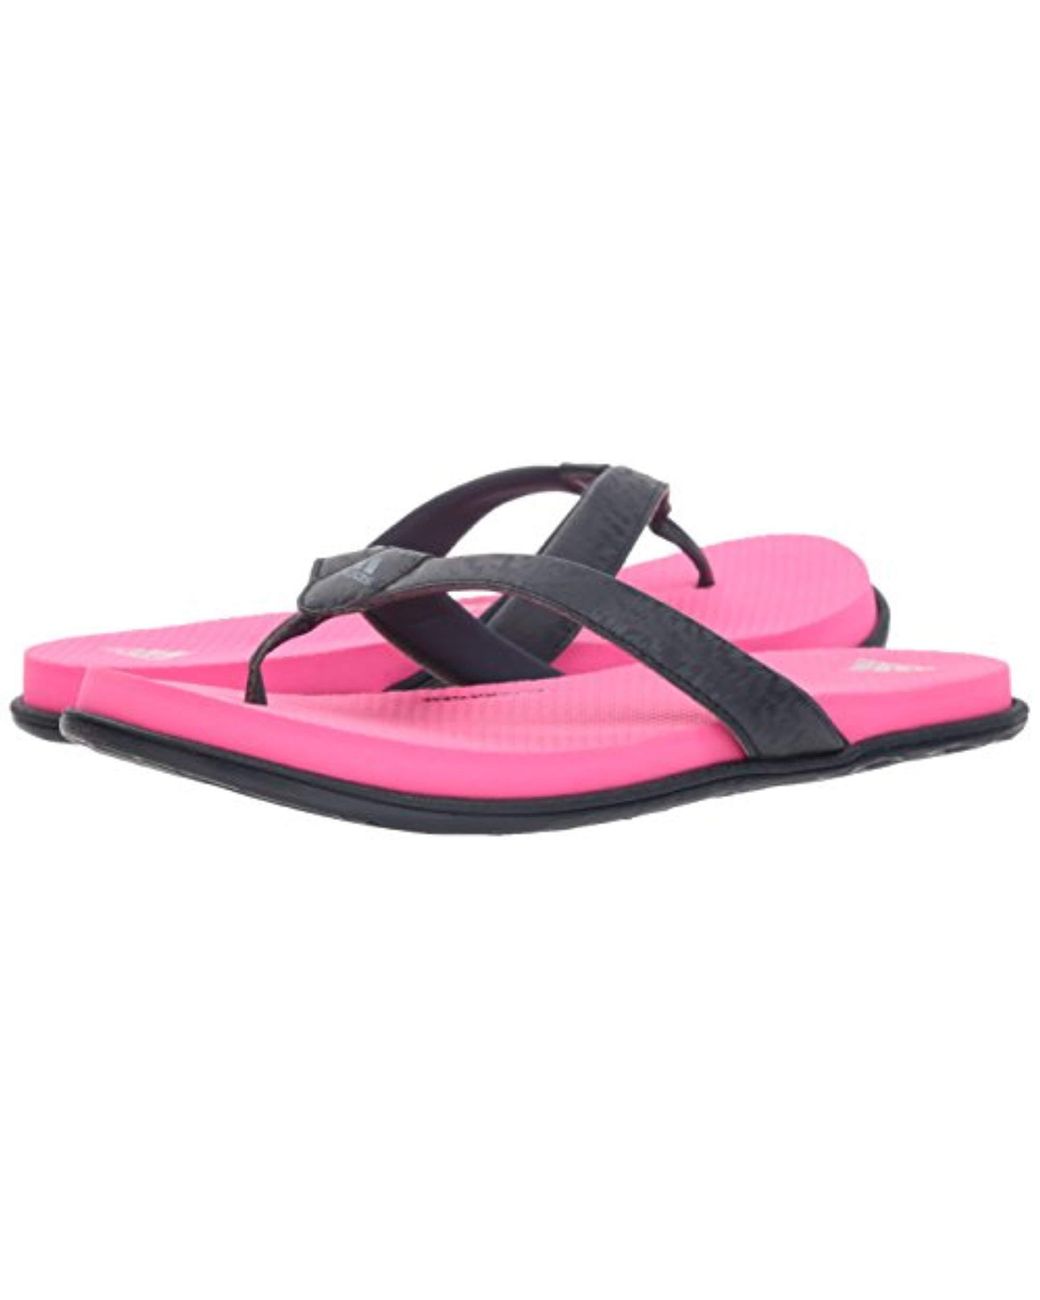 Women's Adidas Fit Foam Flip Flops Size 9 Sandals Black Pink Peach